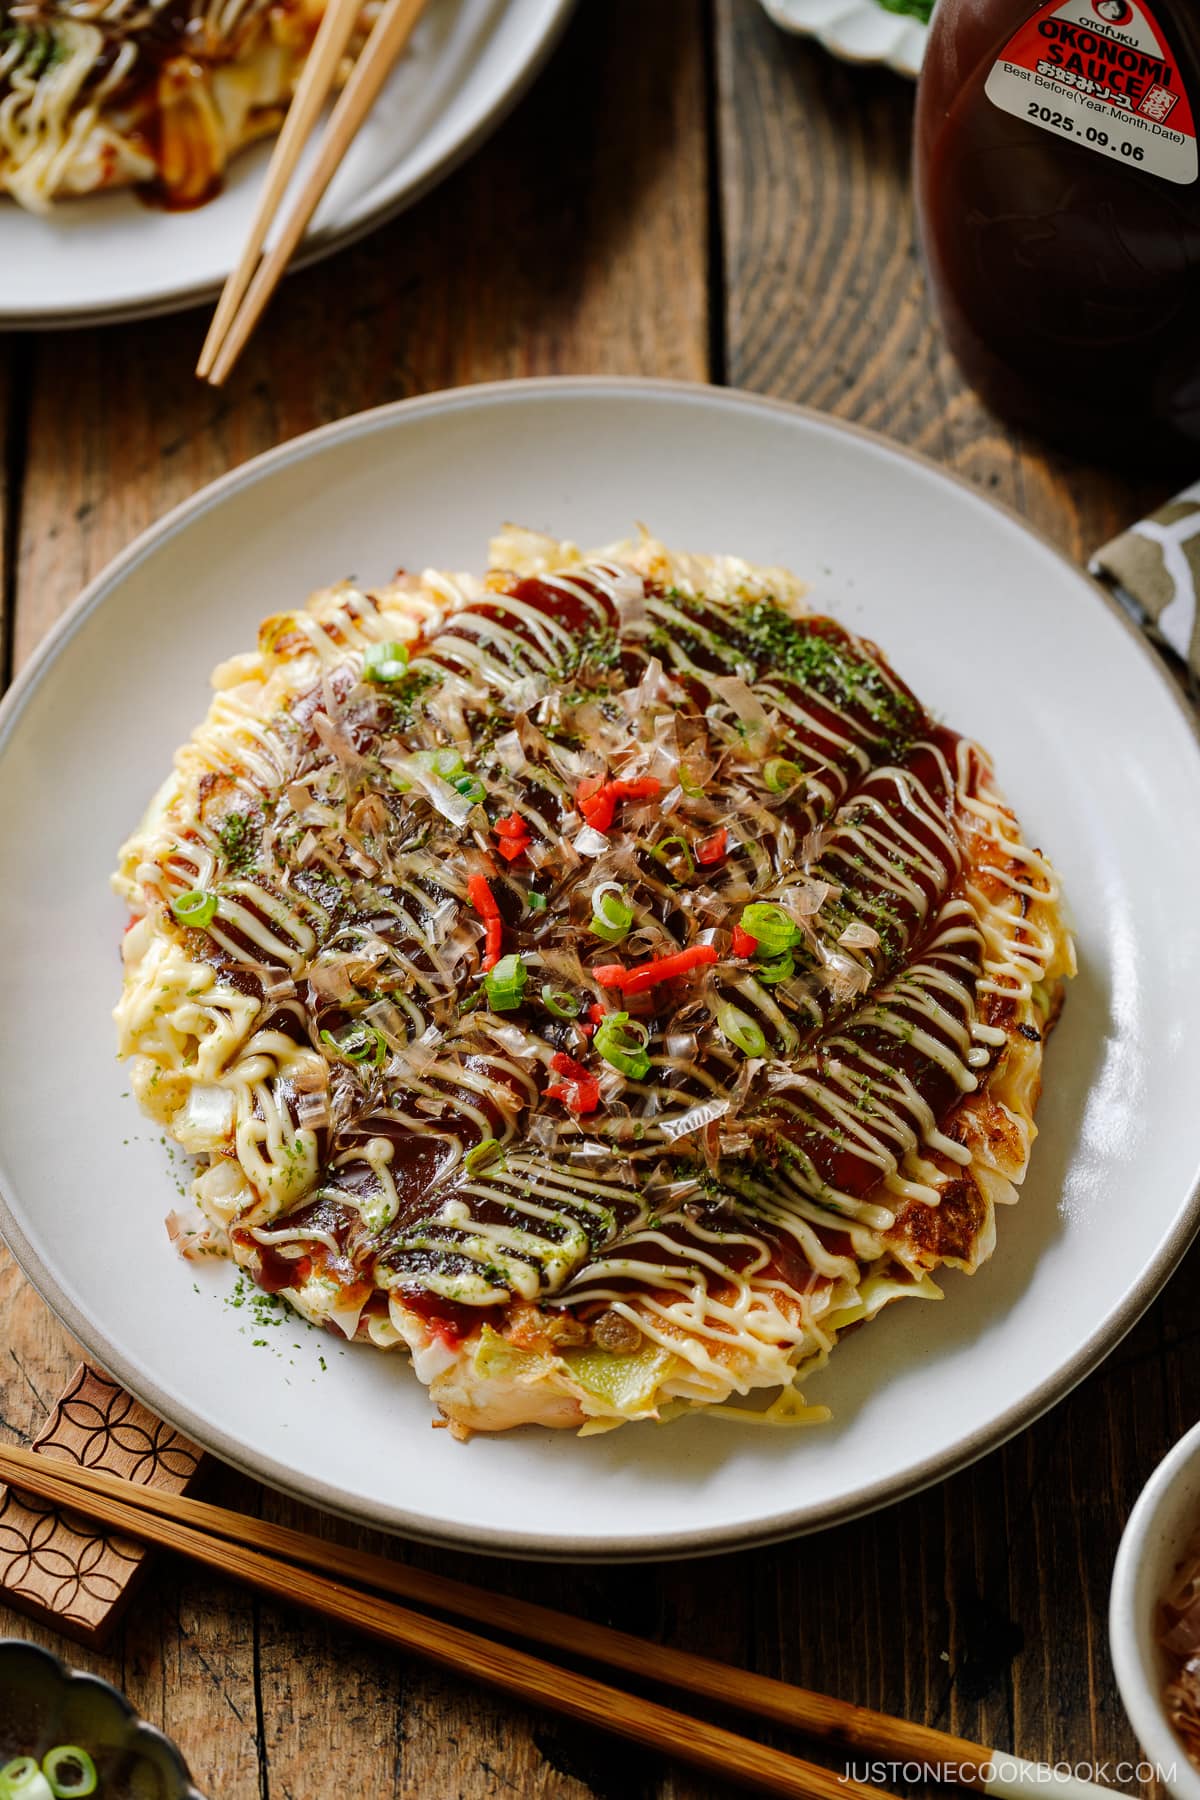 A white ceramic plate containing Okonomiyaki, a savory Japanese cabbage pancake topped with okonomi sauce, Kewpie mayo, and bonito flakes.